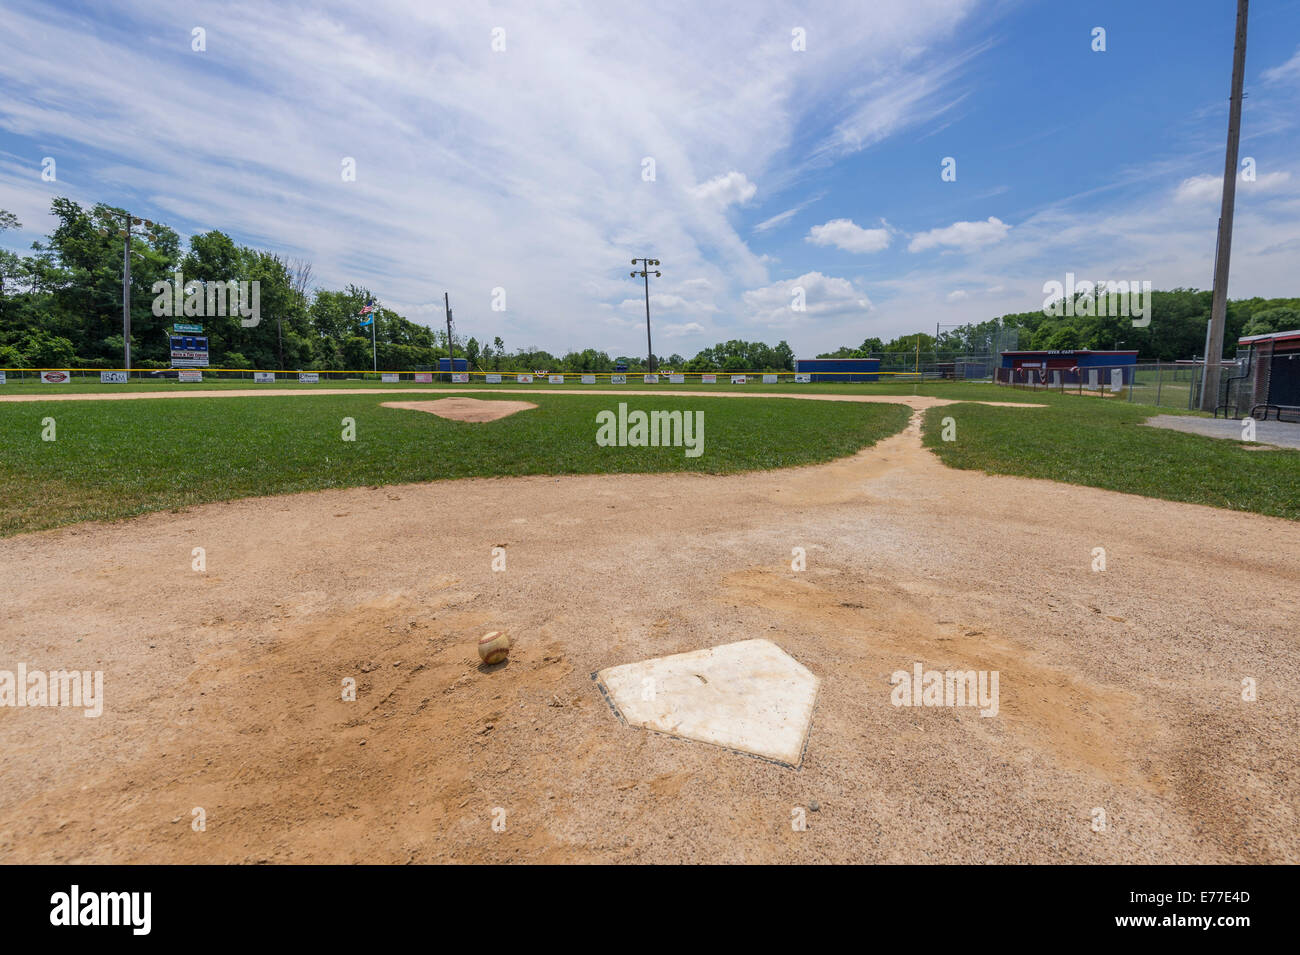 Home PLate & Baseball, la Petite Ligue de baseball Field Banque D'Images